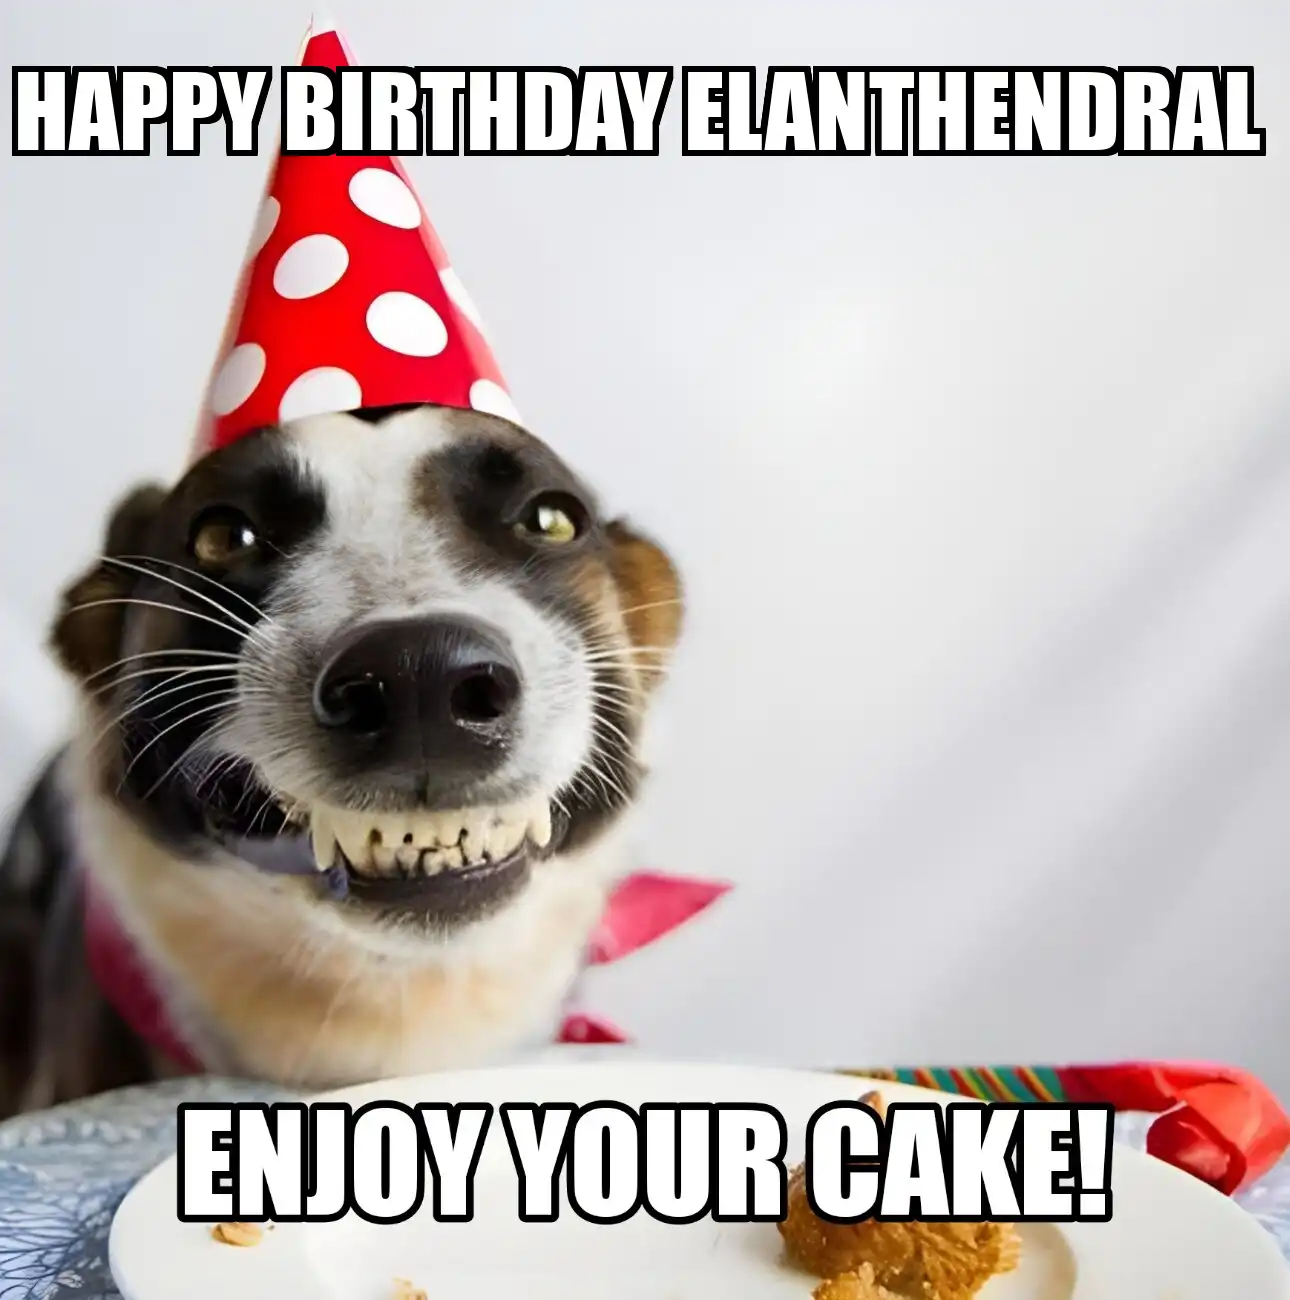 Happy Birthday Elanthendral Enjoy Your Cake Dog Meme